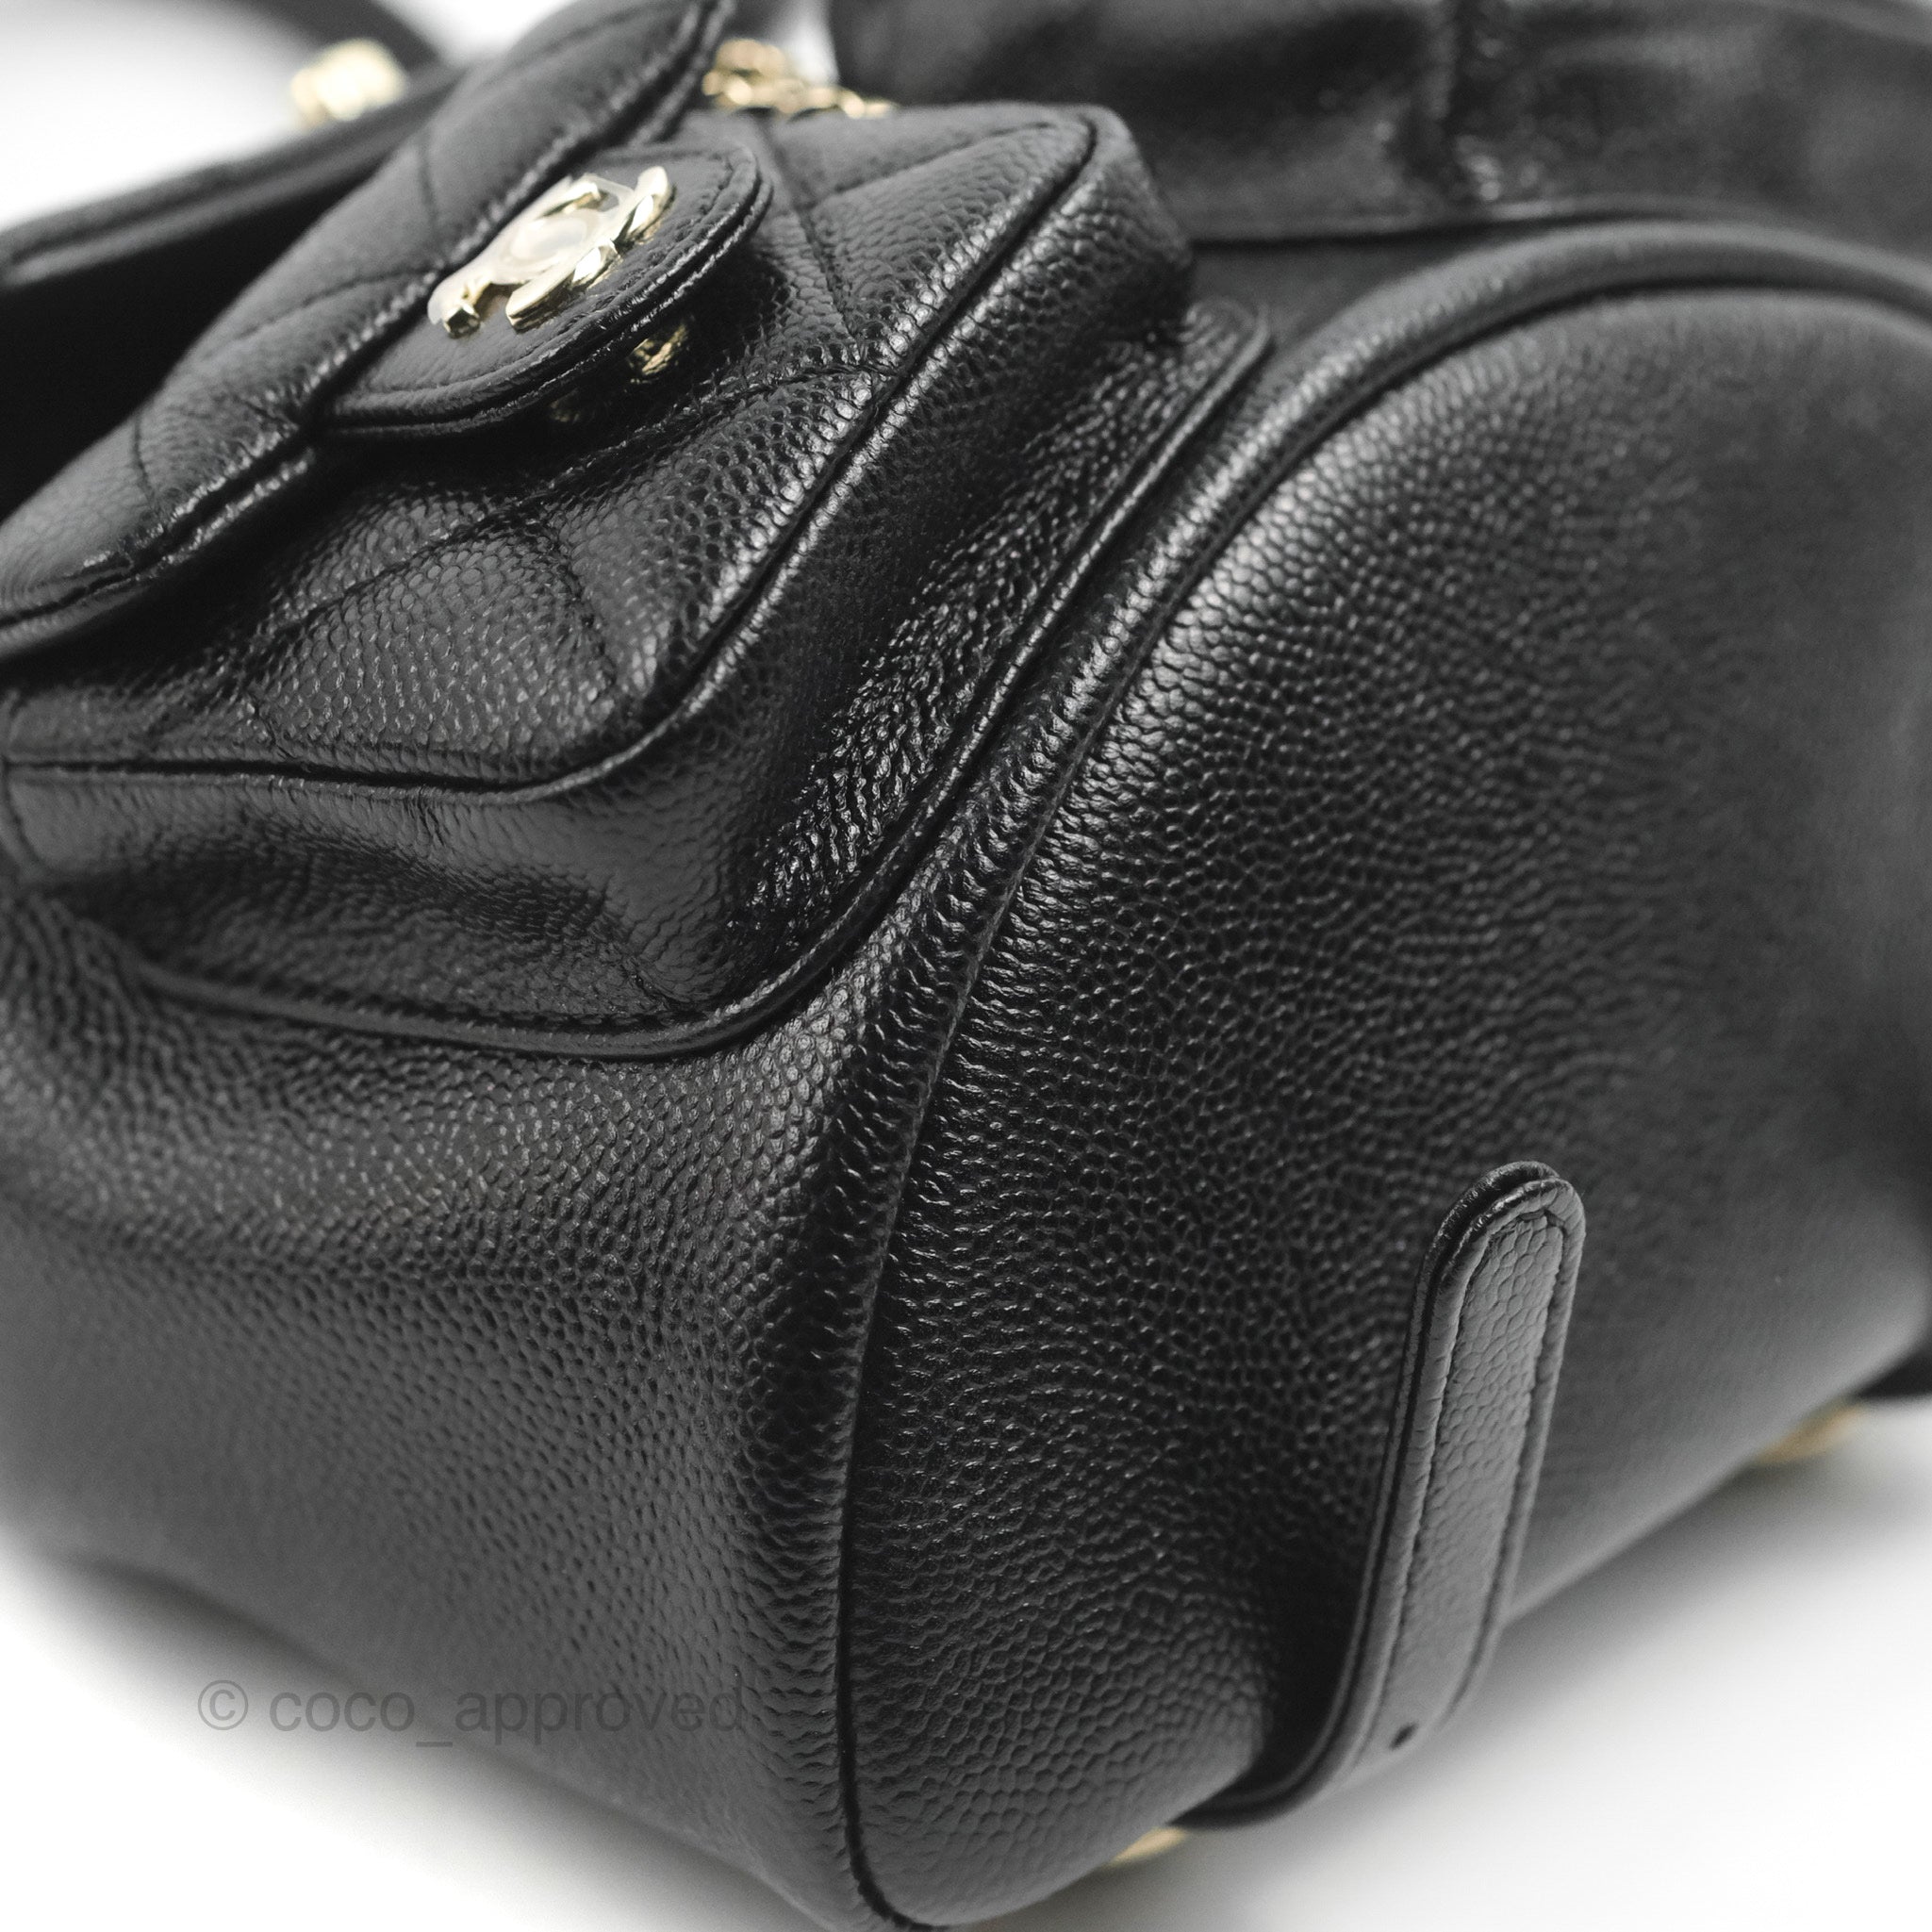 Chanel 23SS Mini Duma Backpack: Where Style Meets Versatility